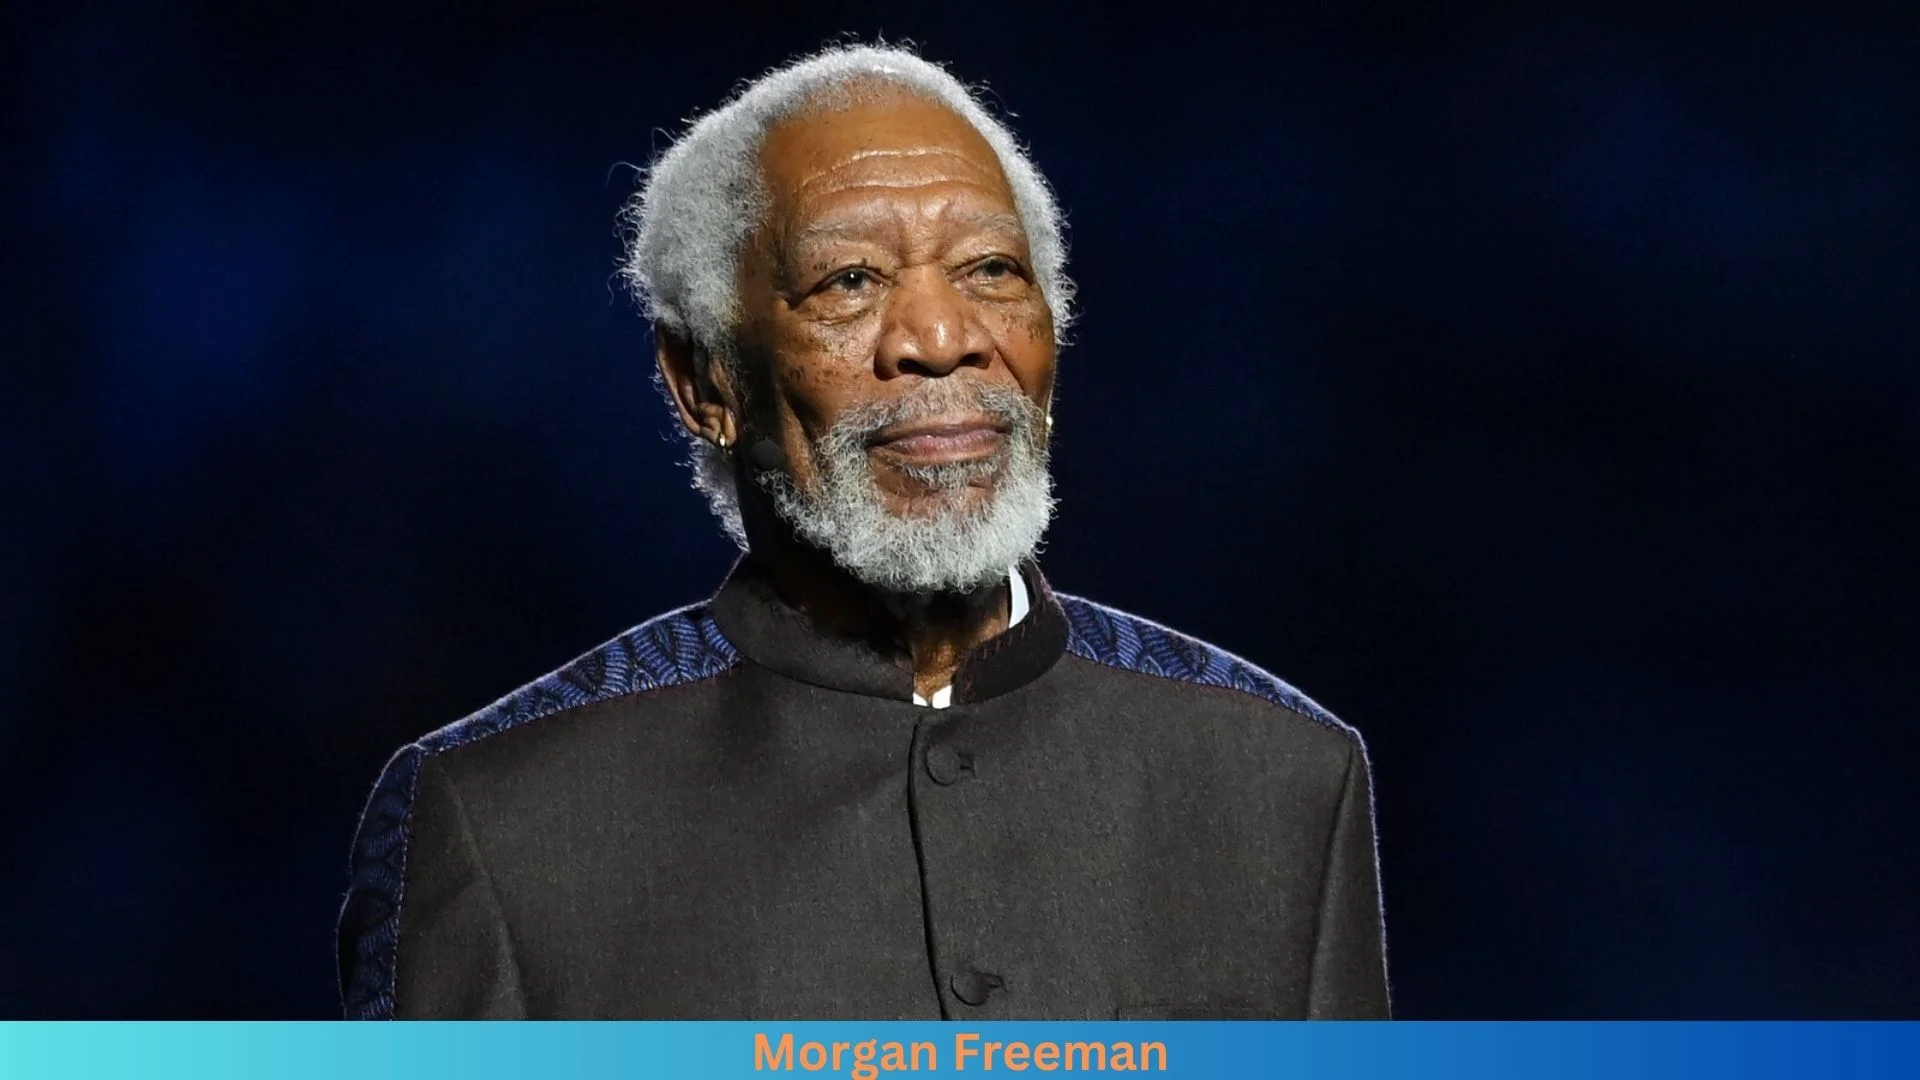 Net Worth of Morgan Freeman